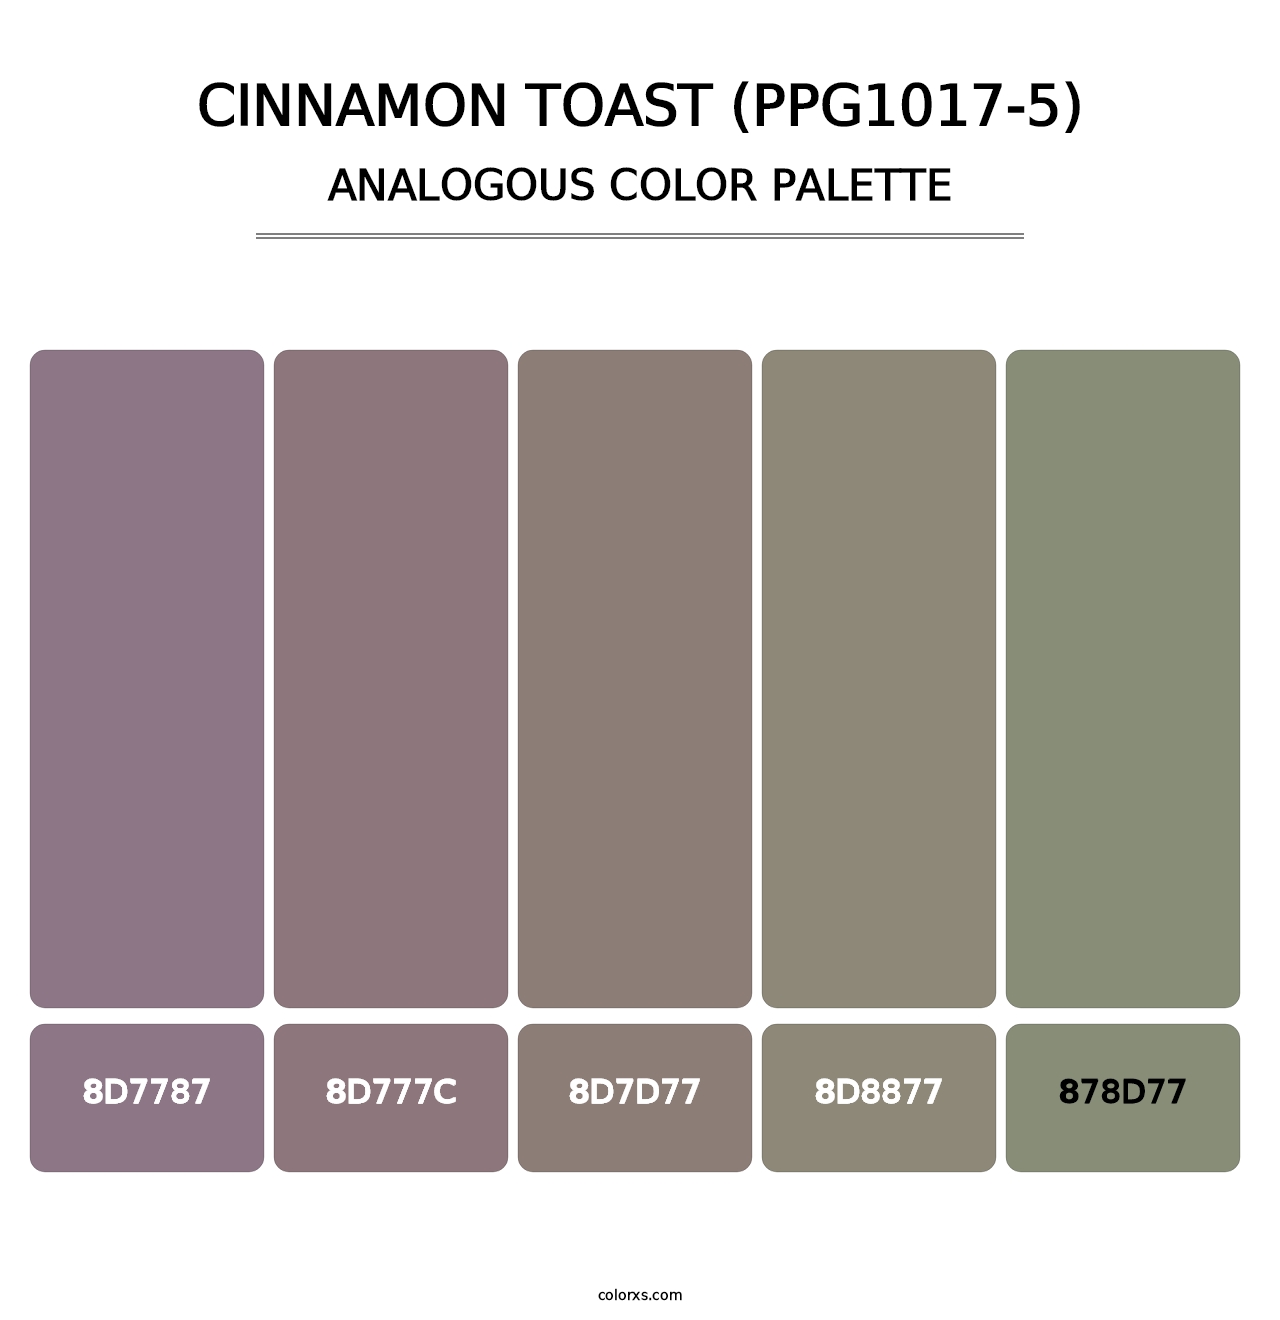 Cinnamon Toast (PPG1017-5) - Analogous Color Palette